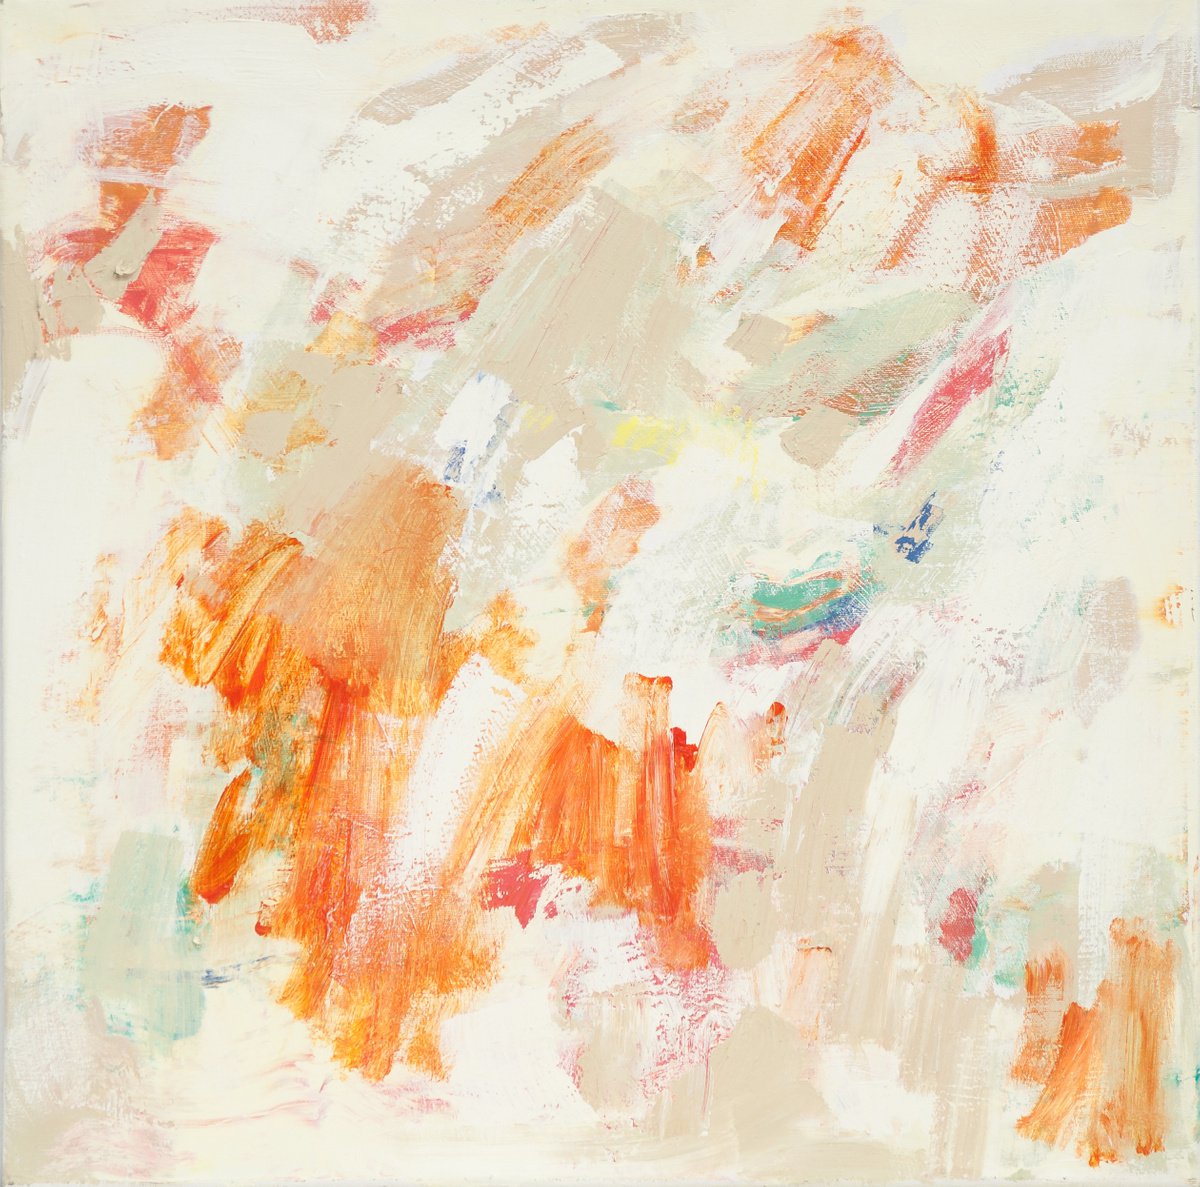 Orange abstraction by Susana Sancho Beltr�n